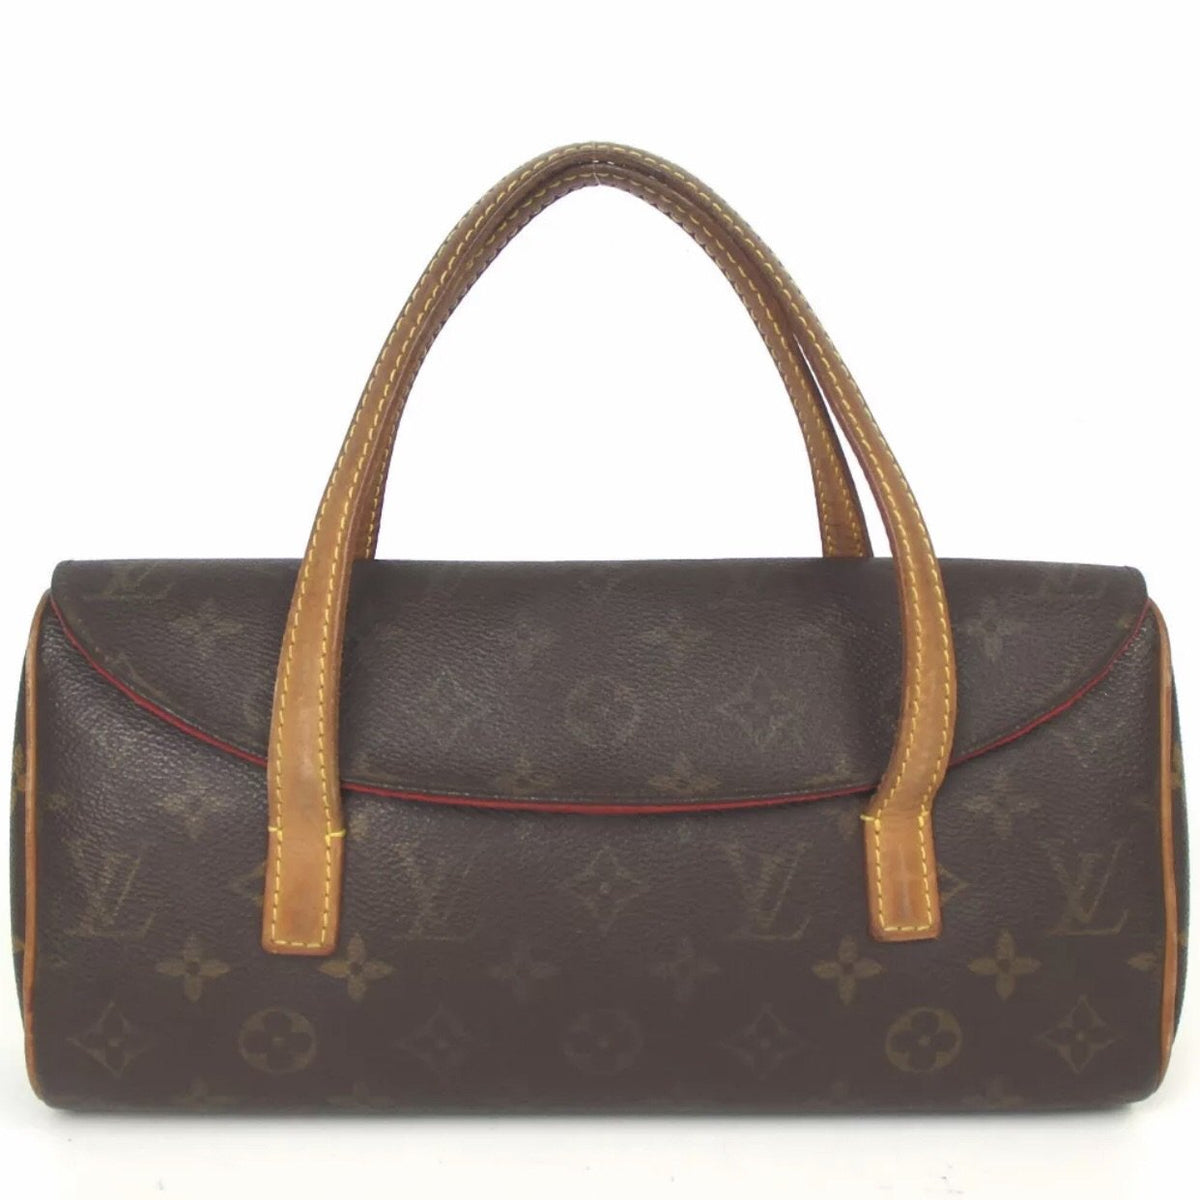 Vintage Louis Vuitton Monogram LV Shoulder Bag